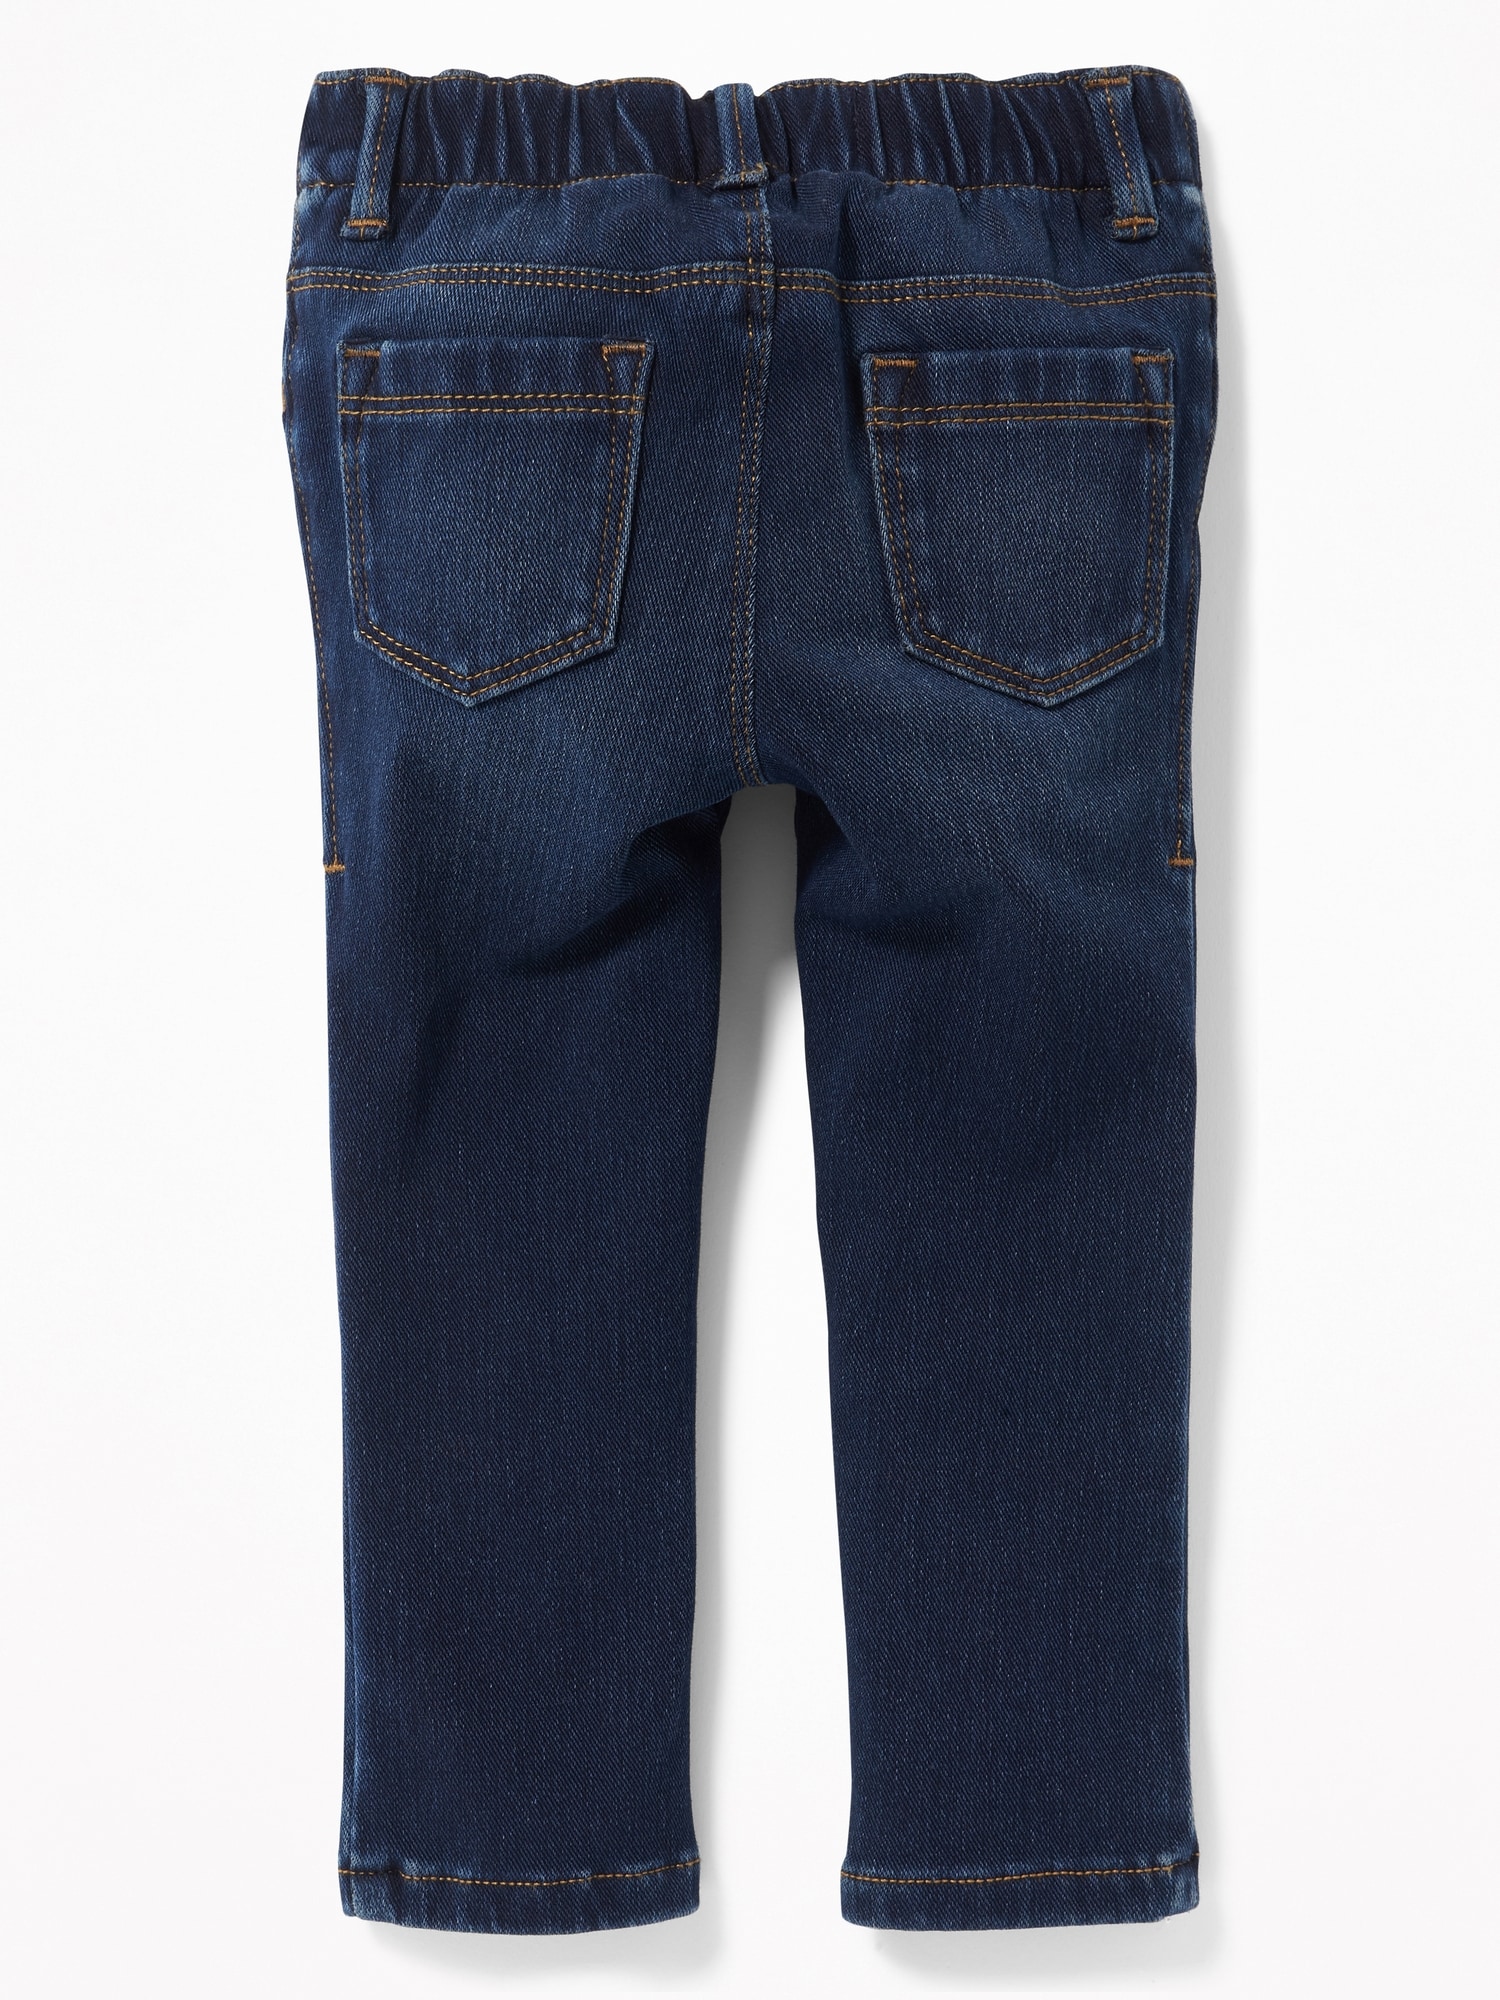 NWT Old Navy Skinny Pull-On Jeggings Jeans Pants Dark Rinse Denim Girls M 8